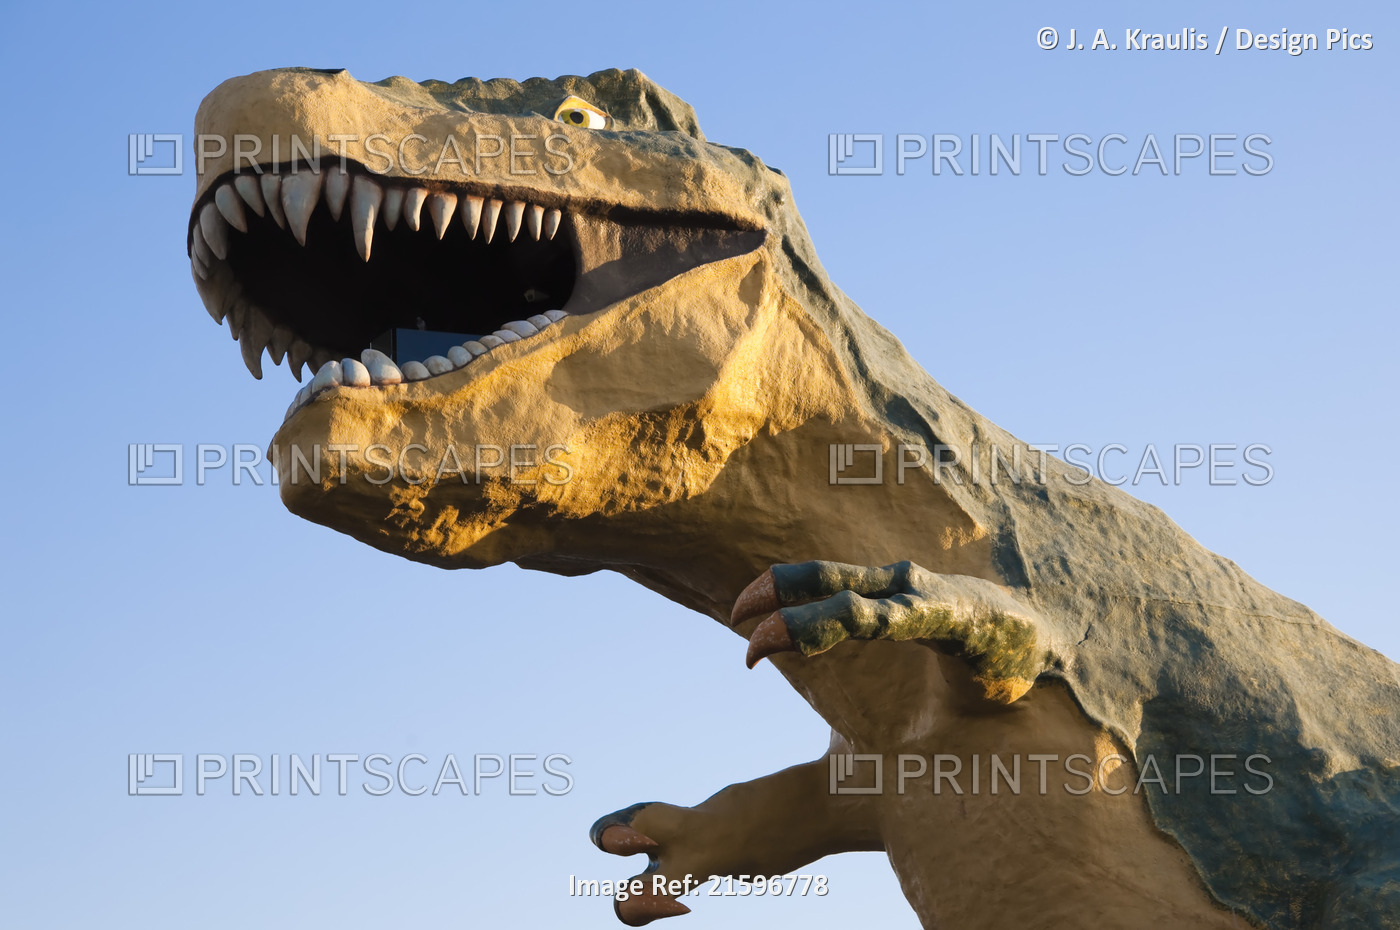 World's Largest Dinosaur, Drumheller, Alberta, Canada